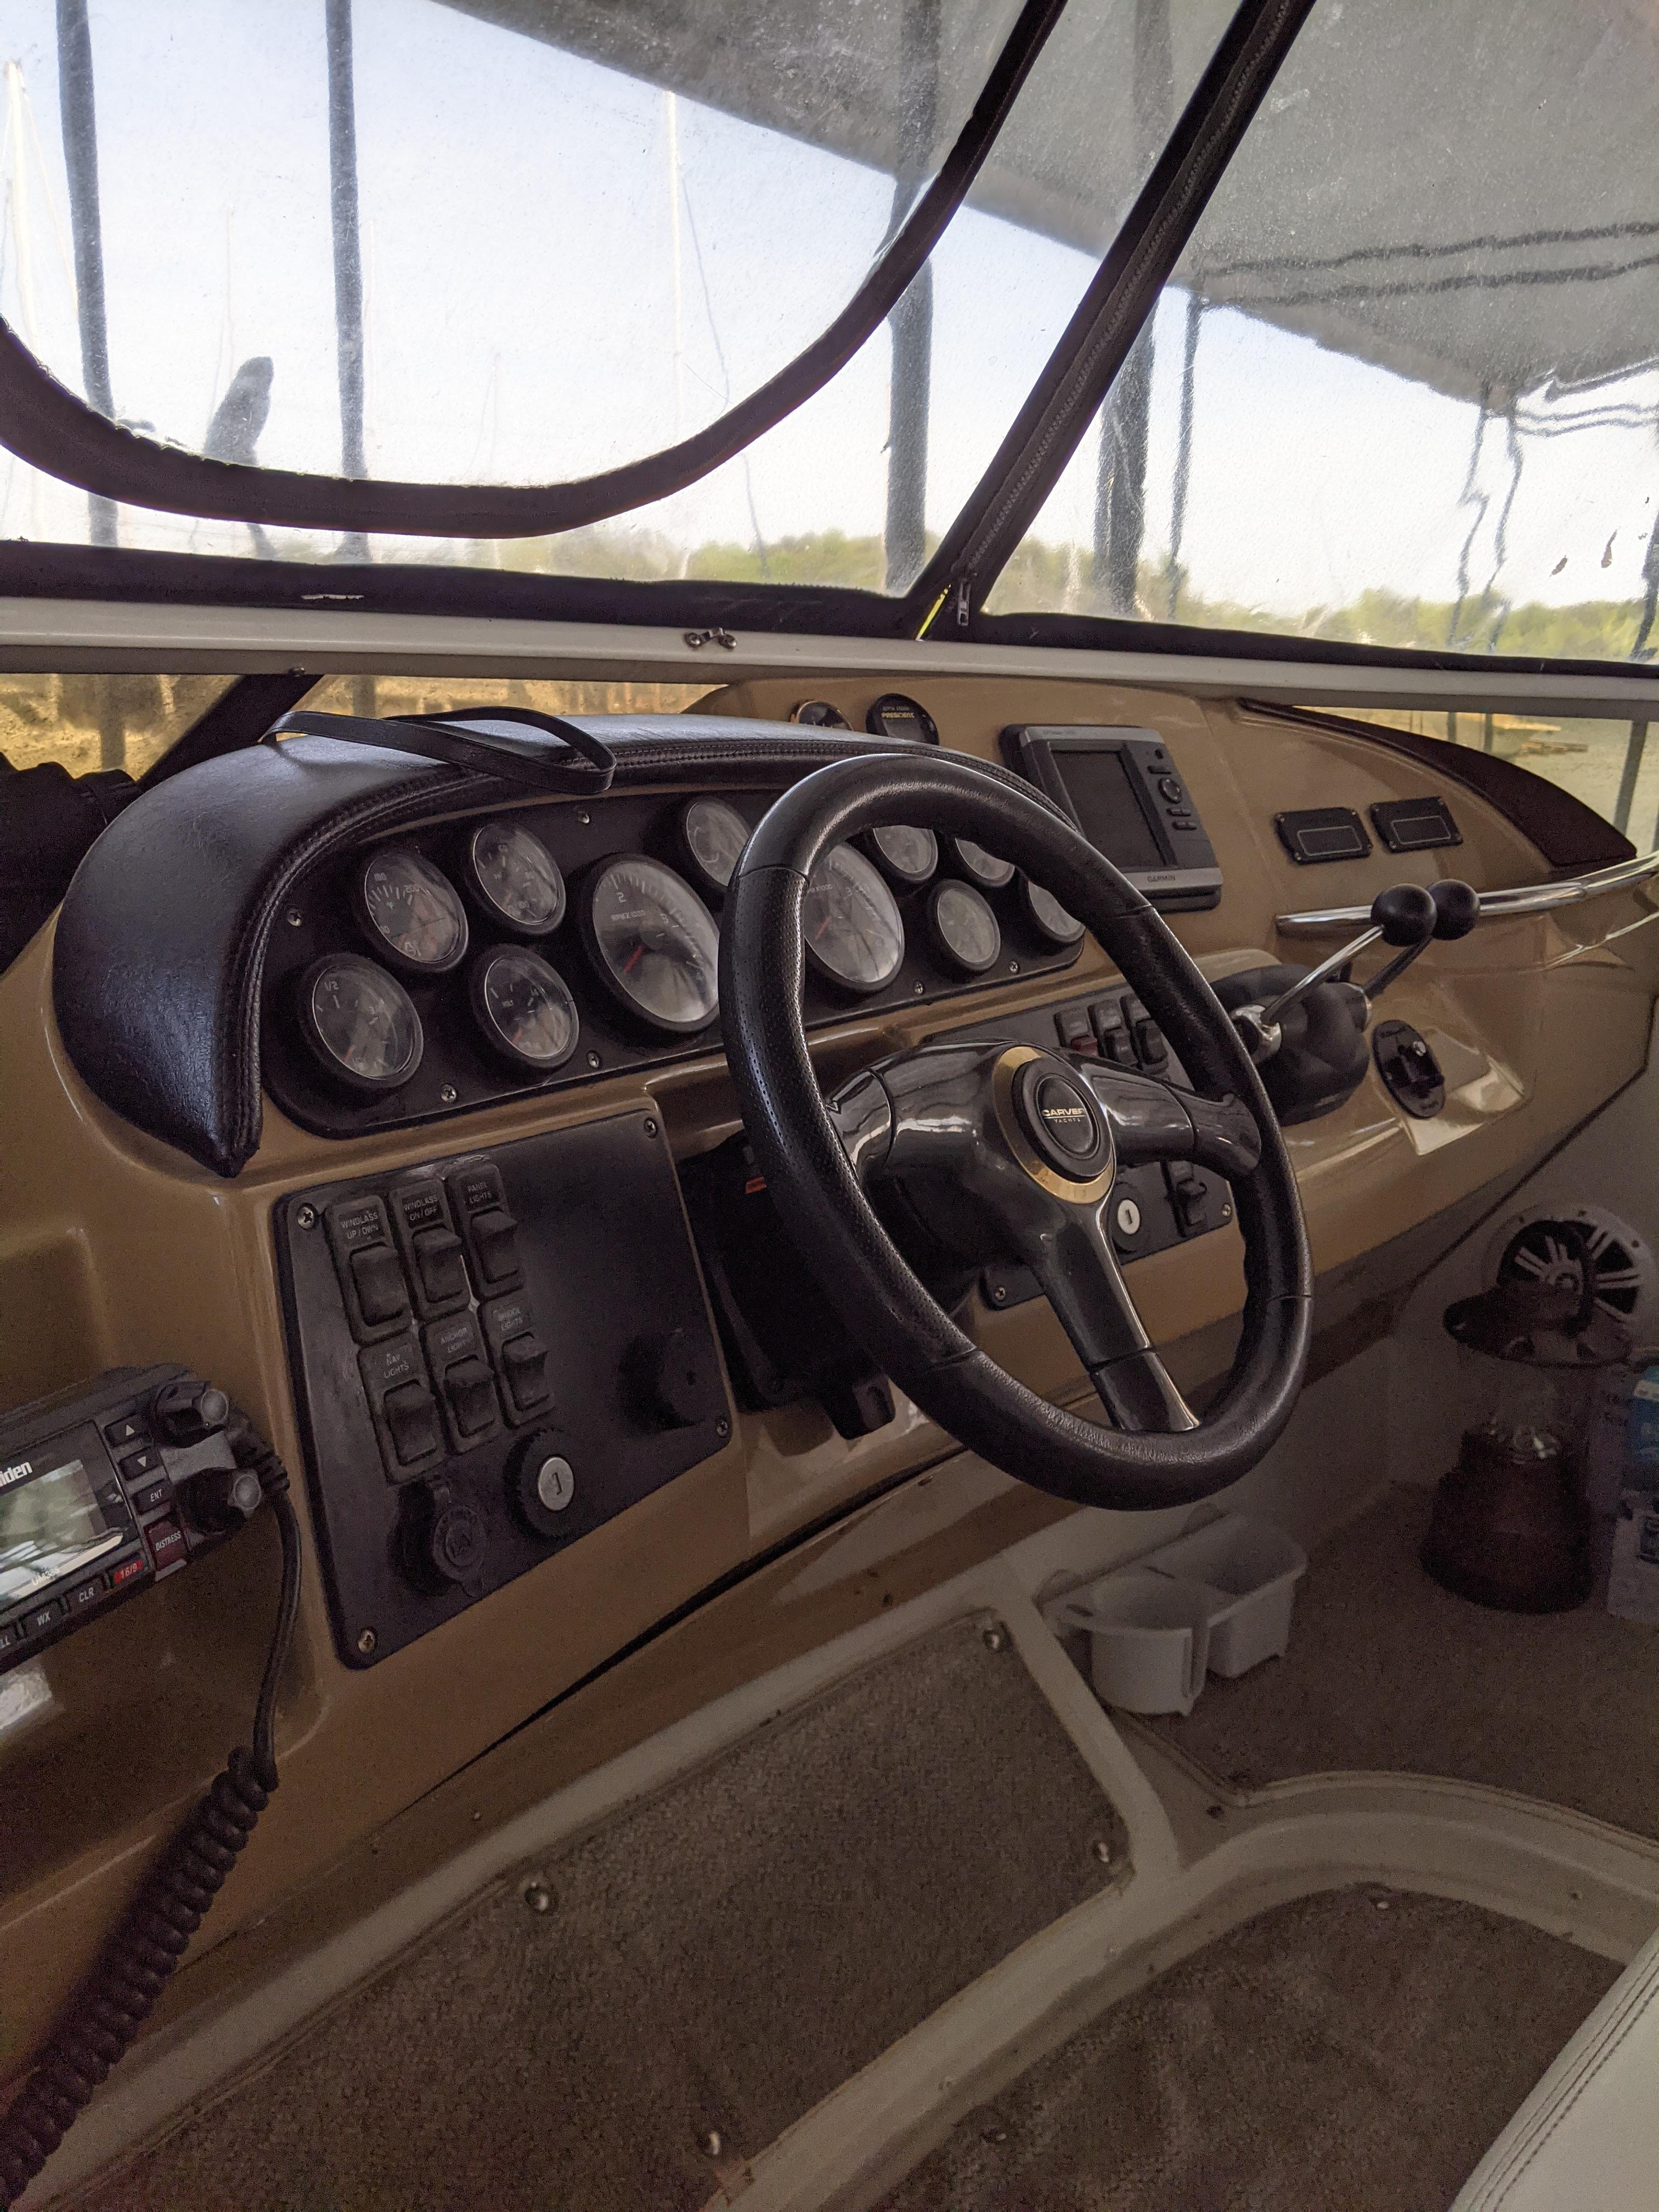 2002 Carver 444 Cockpit Motor Yacht